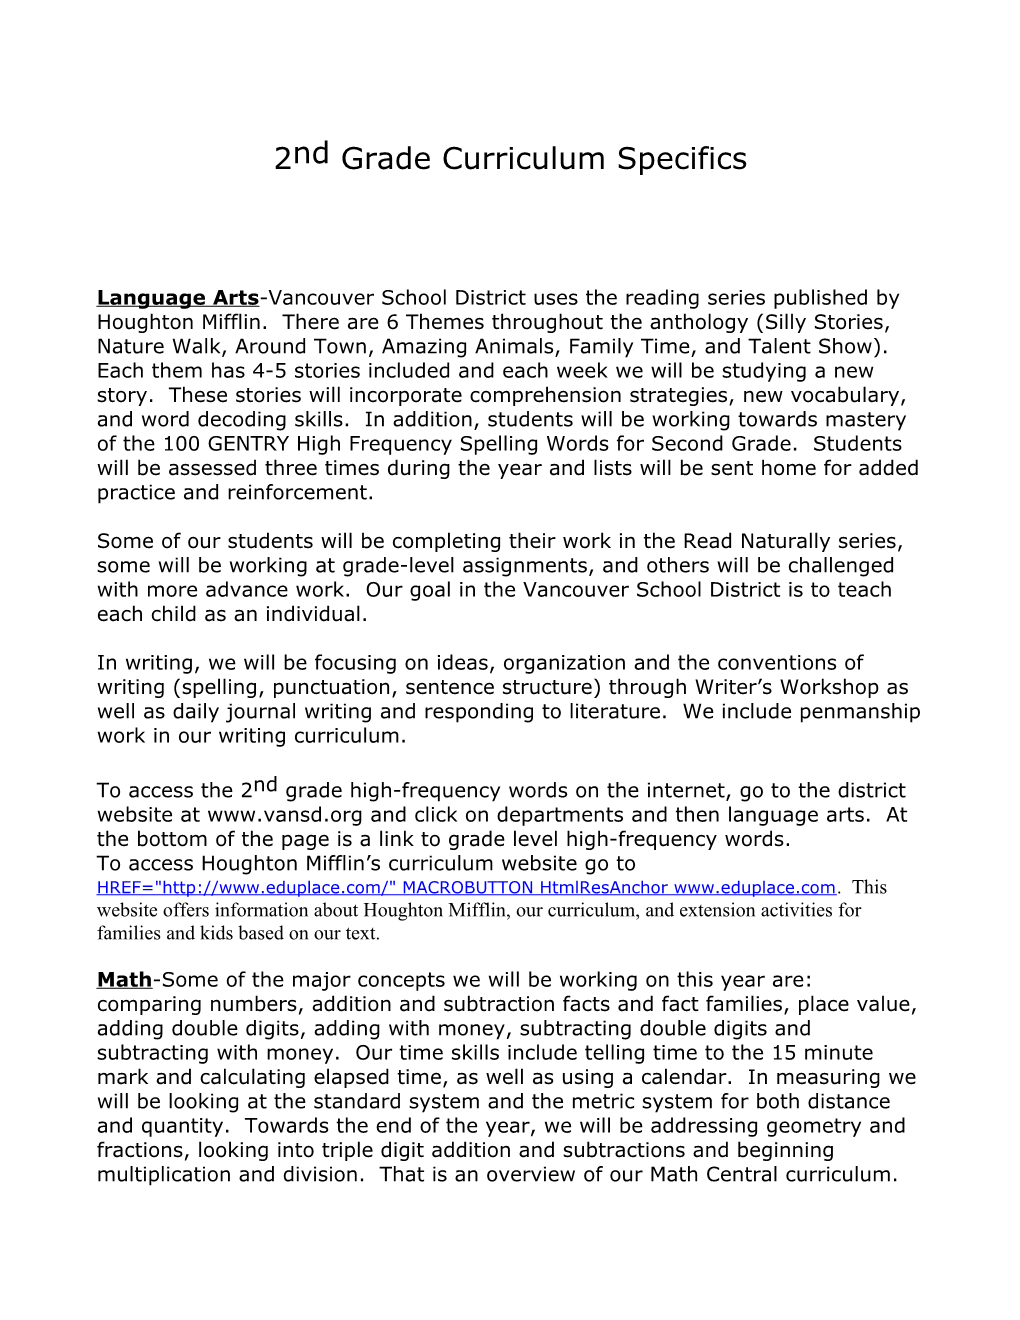 2Nd Grade Curriculum Specifics